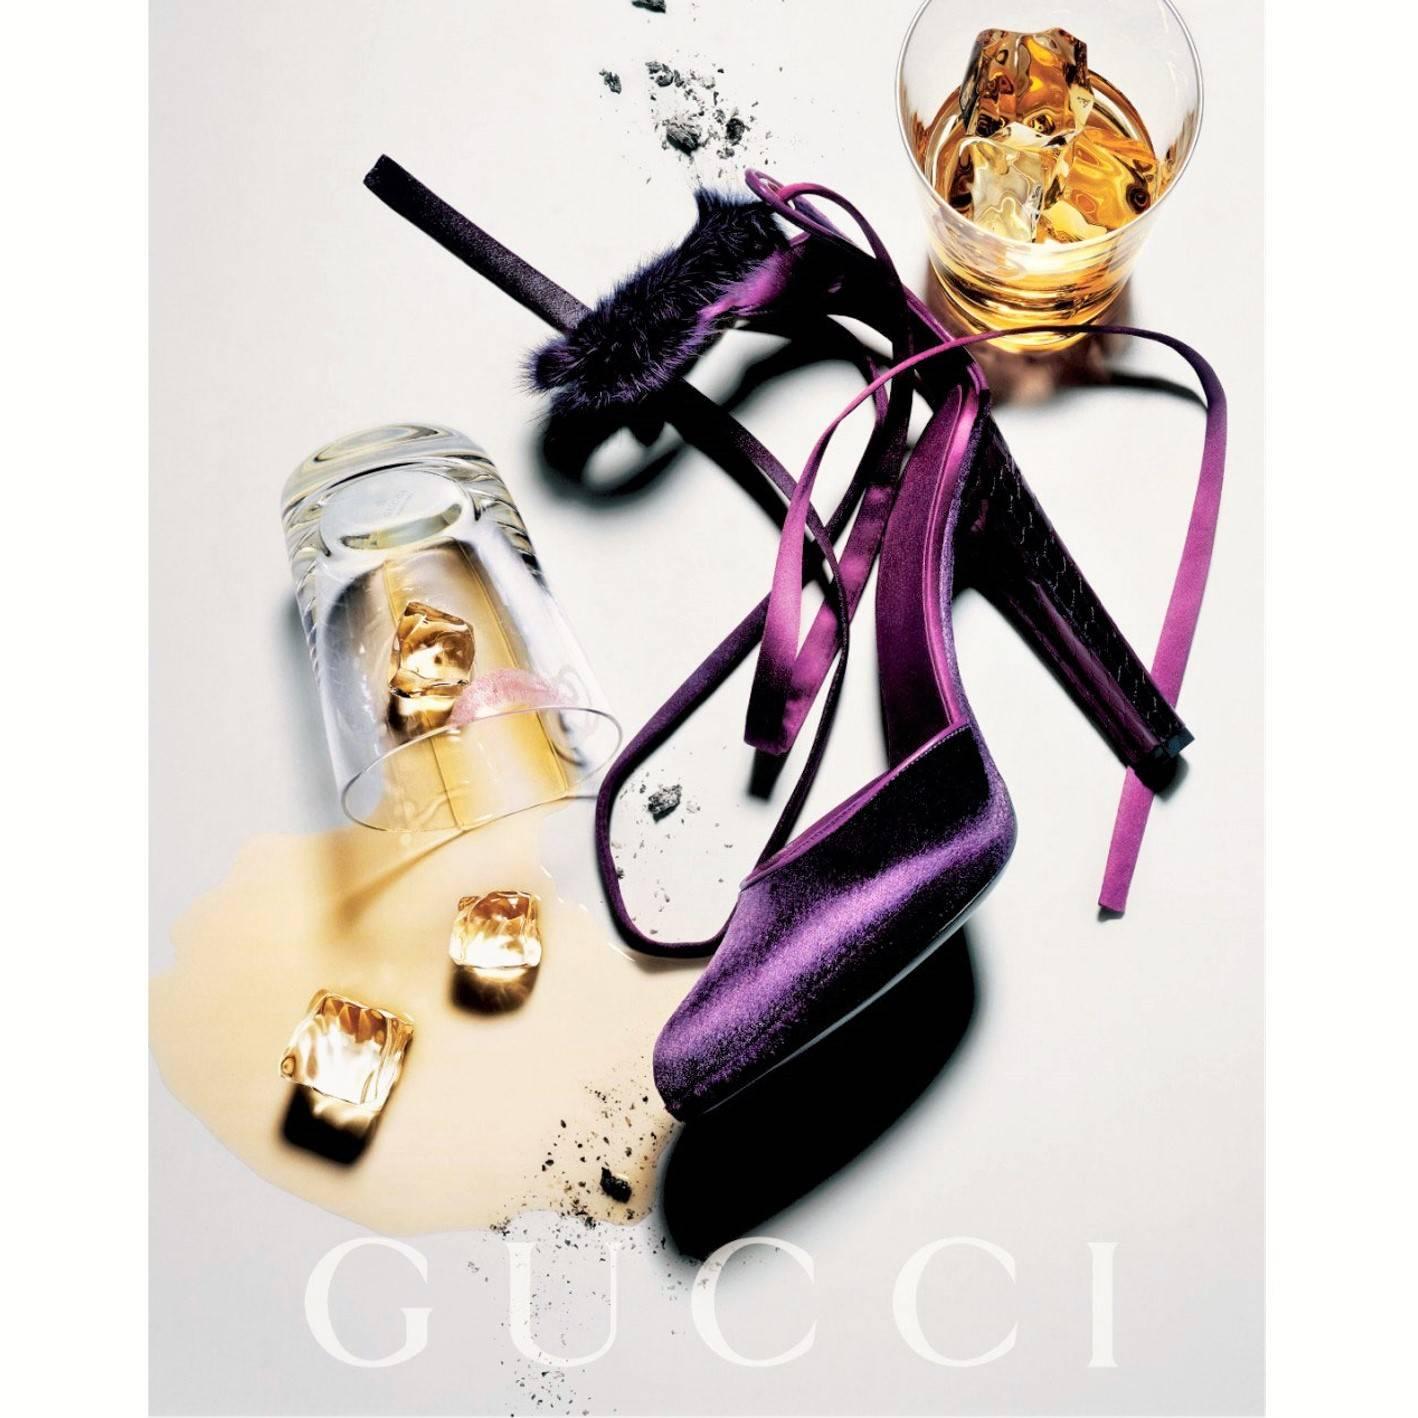 Tom Ford for Gucci Mink Python Heels
Brand New
U.S. Size: 9
* Mink, Satin, Python and Velvet heels
* Tom Ford's 